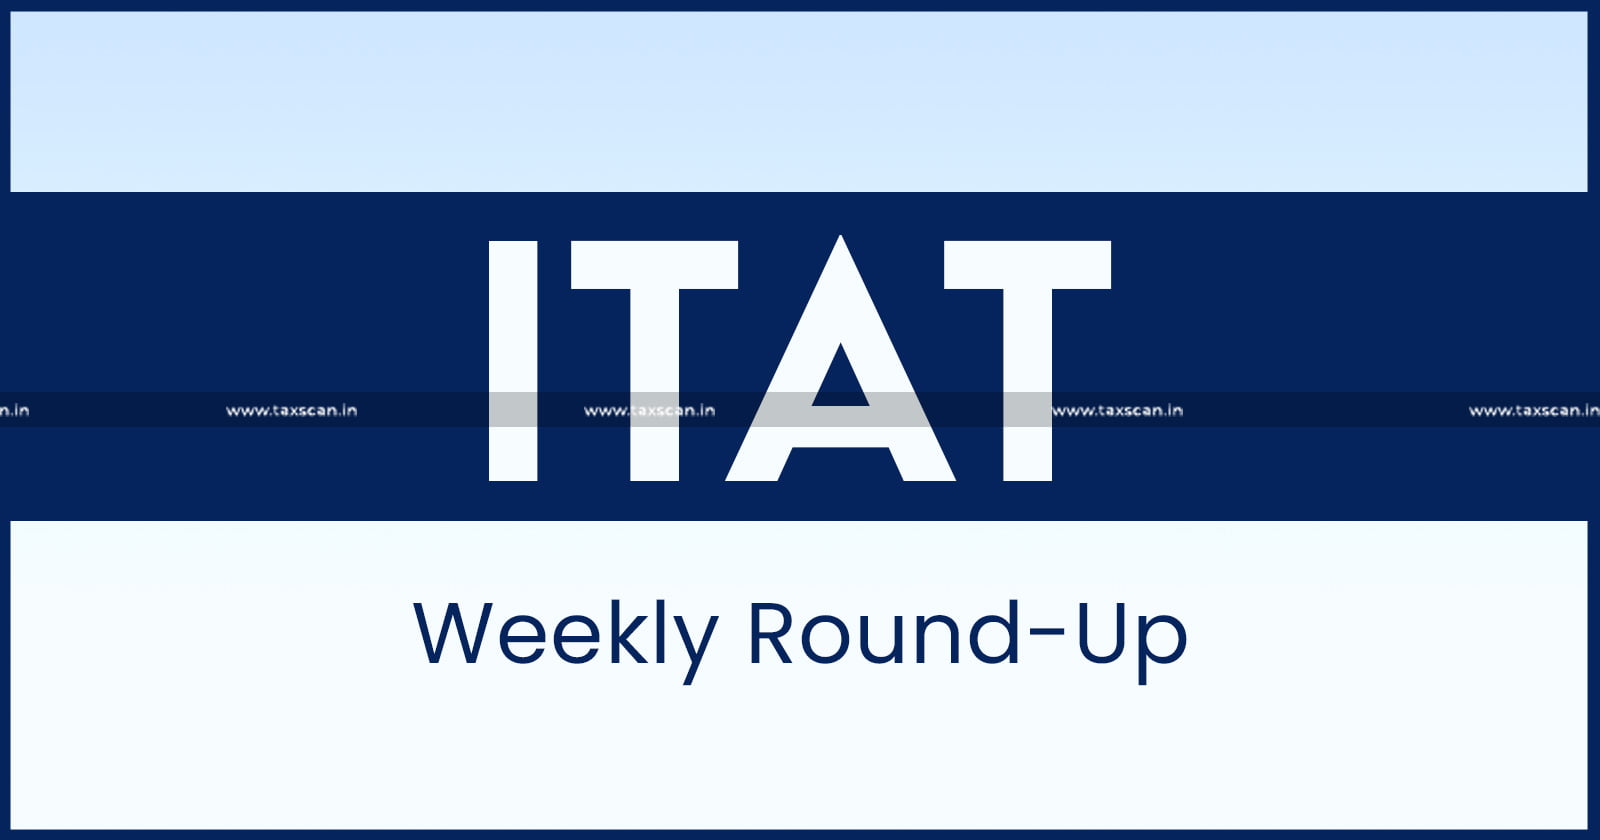 ITAT - ITAT Weekly Round-Up - Round-Up - Weekly Round-Up - Taxscan